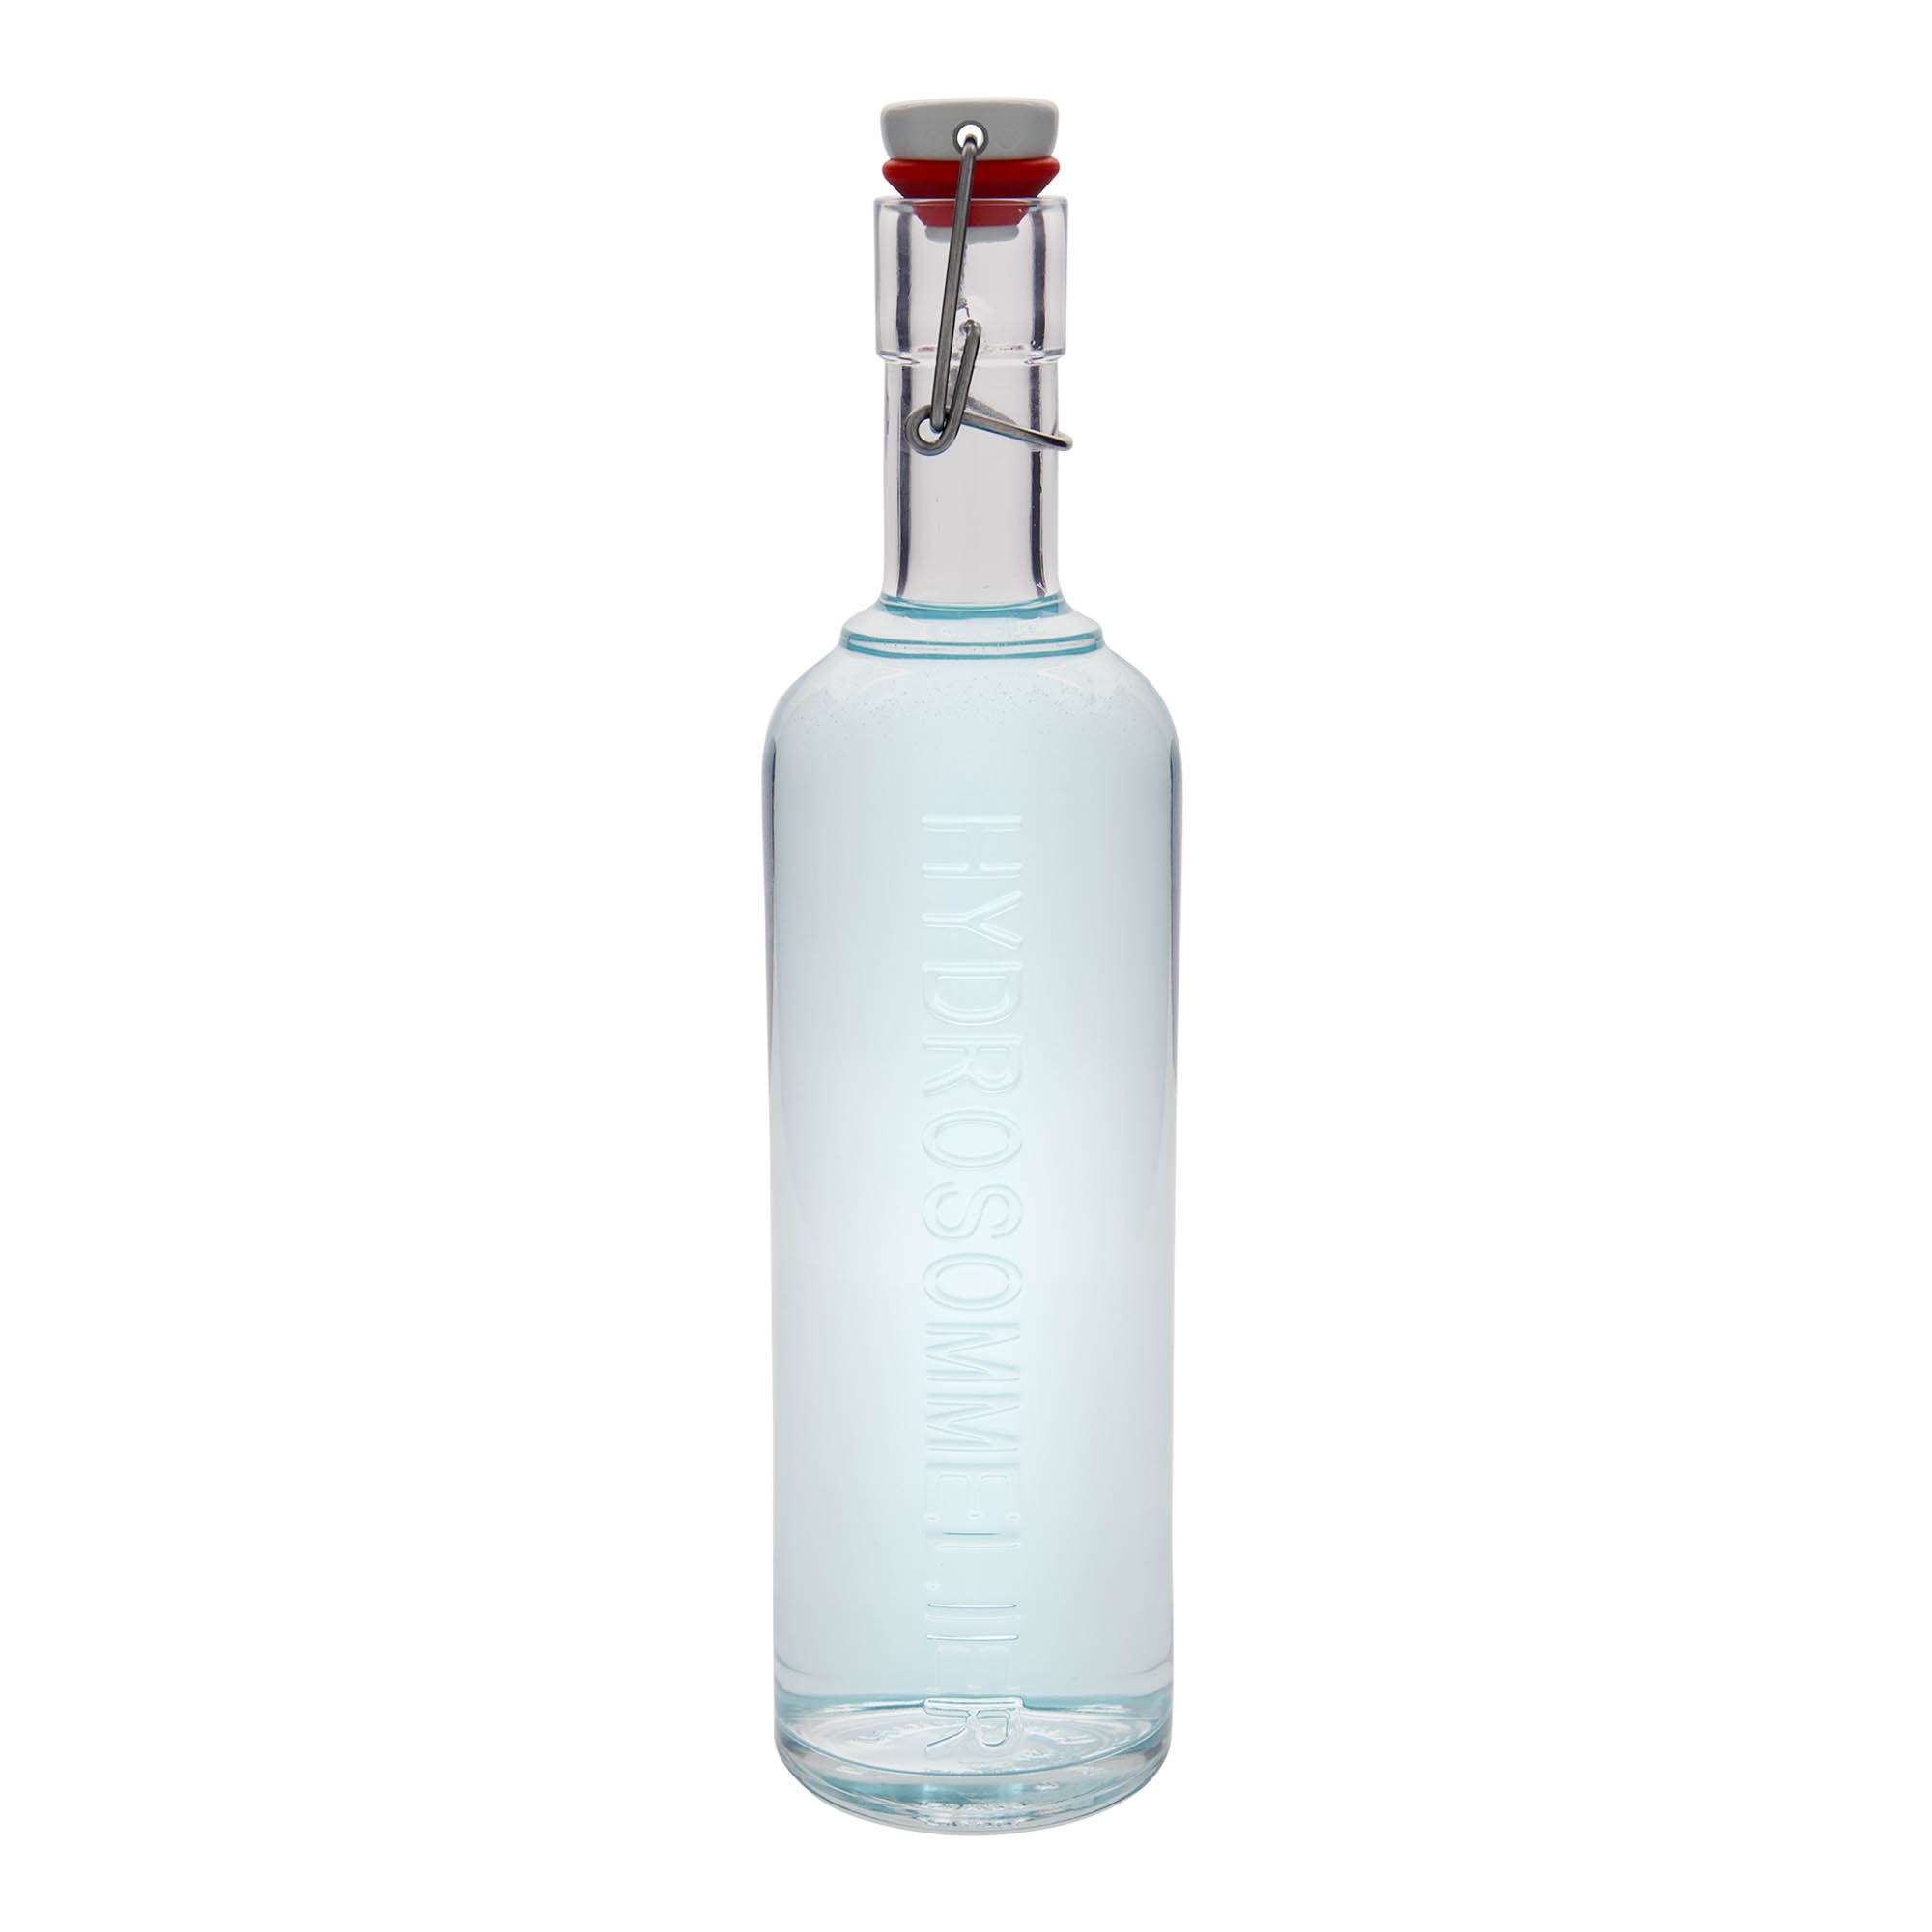 1,000 ml glass bottle 'Optima Hydrosommelier', closure: swing top